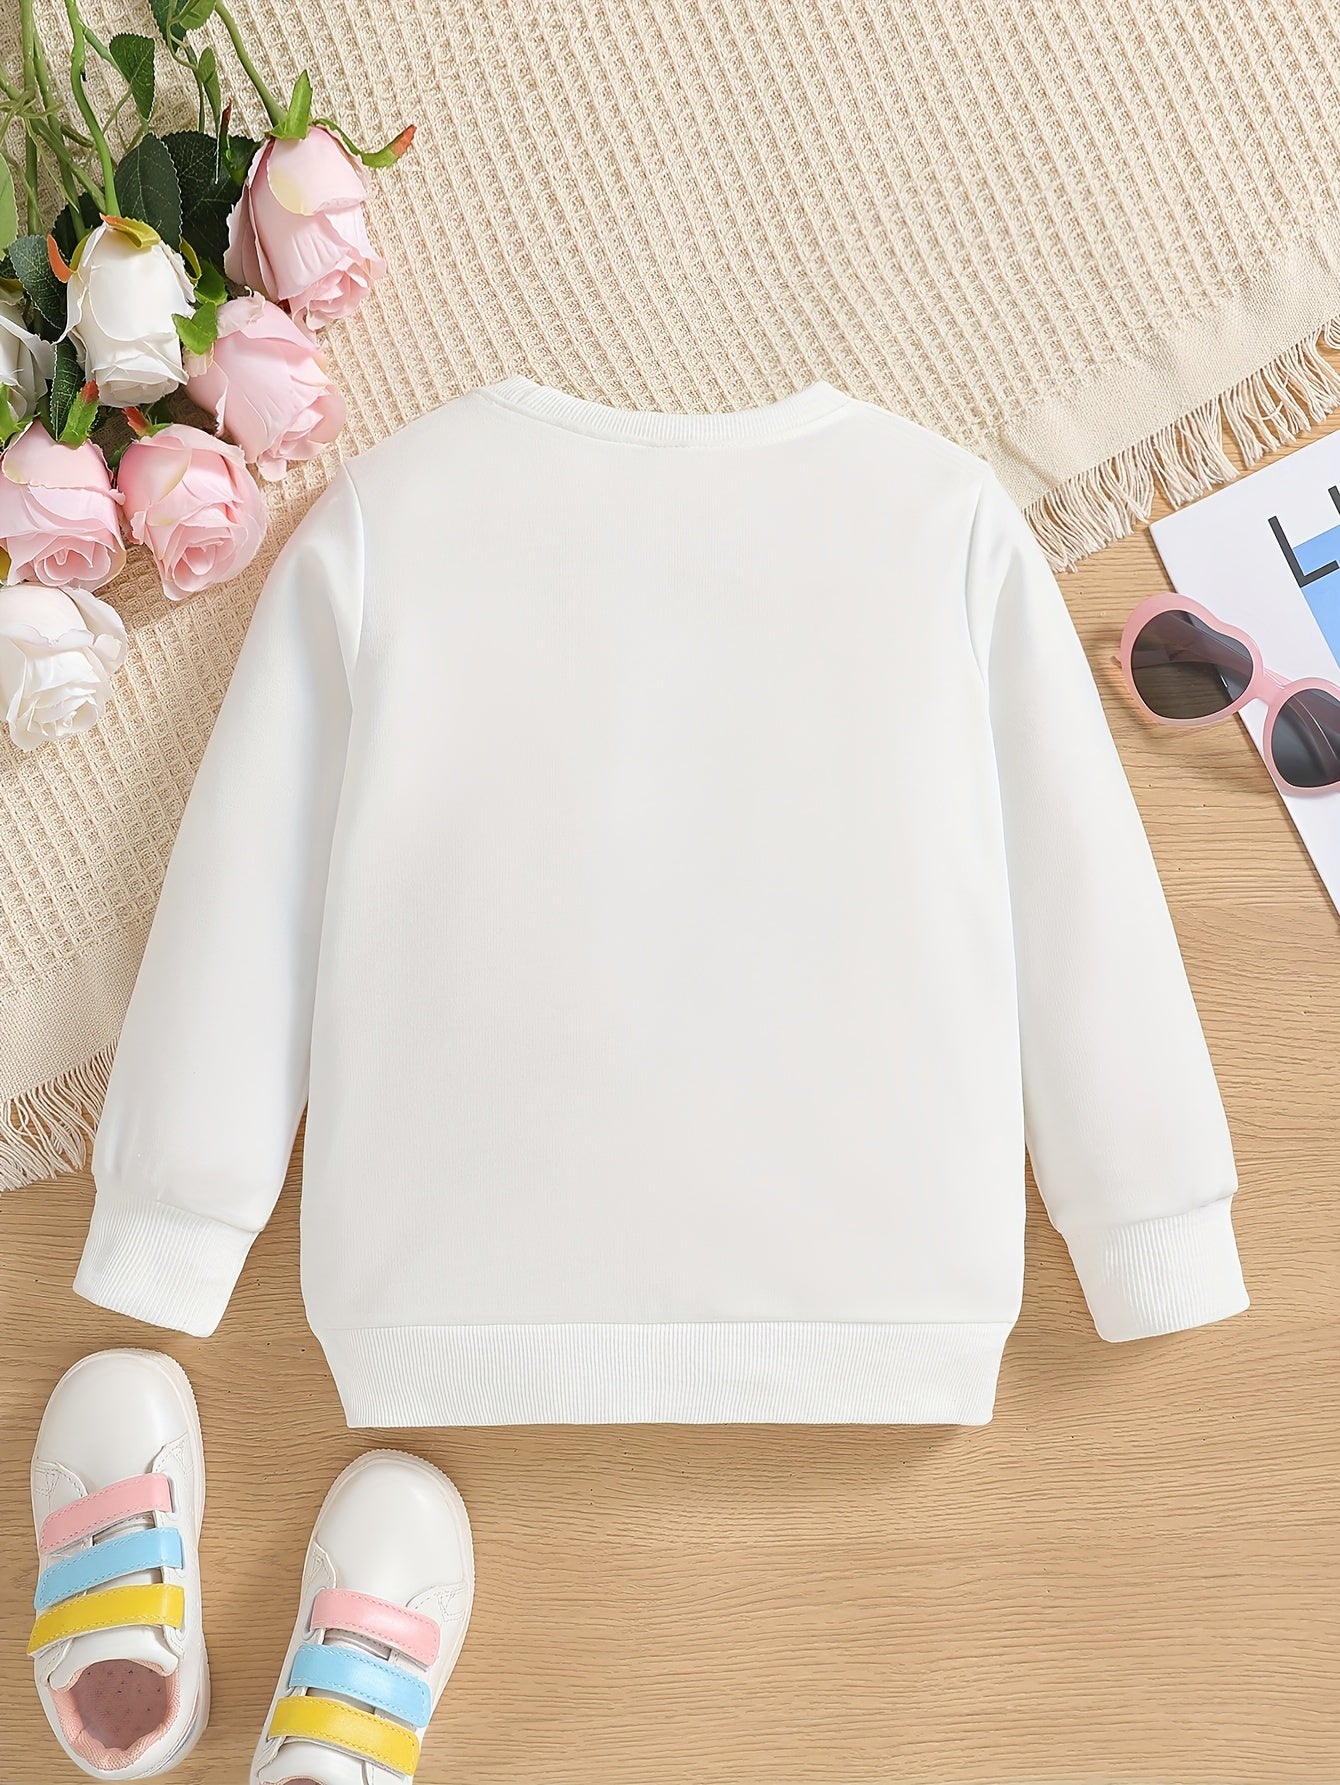 Simple Fashion Casual Personality Girl Sweatshirt